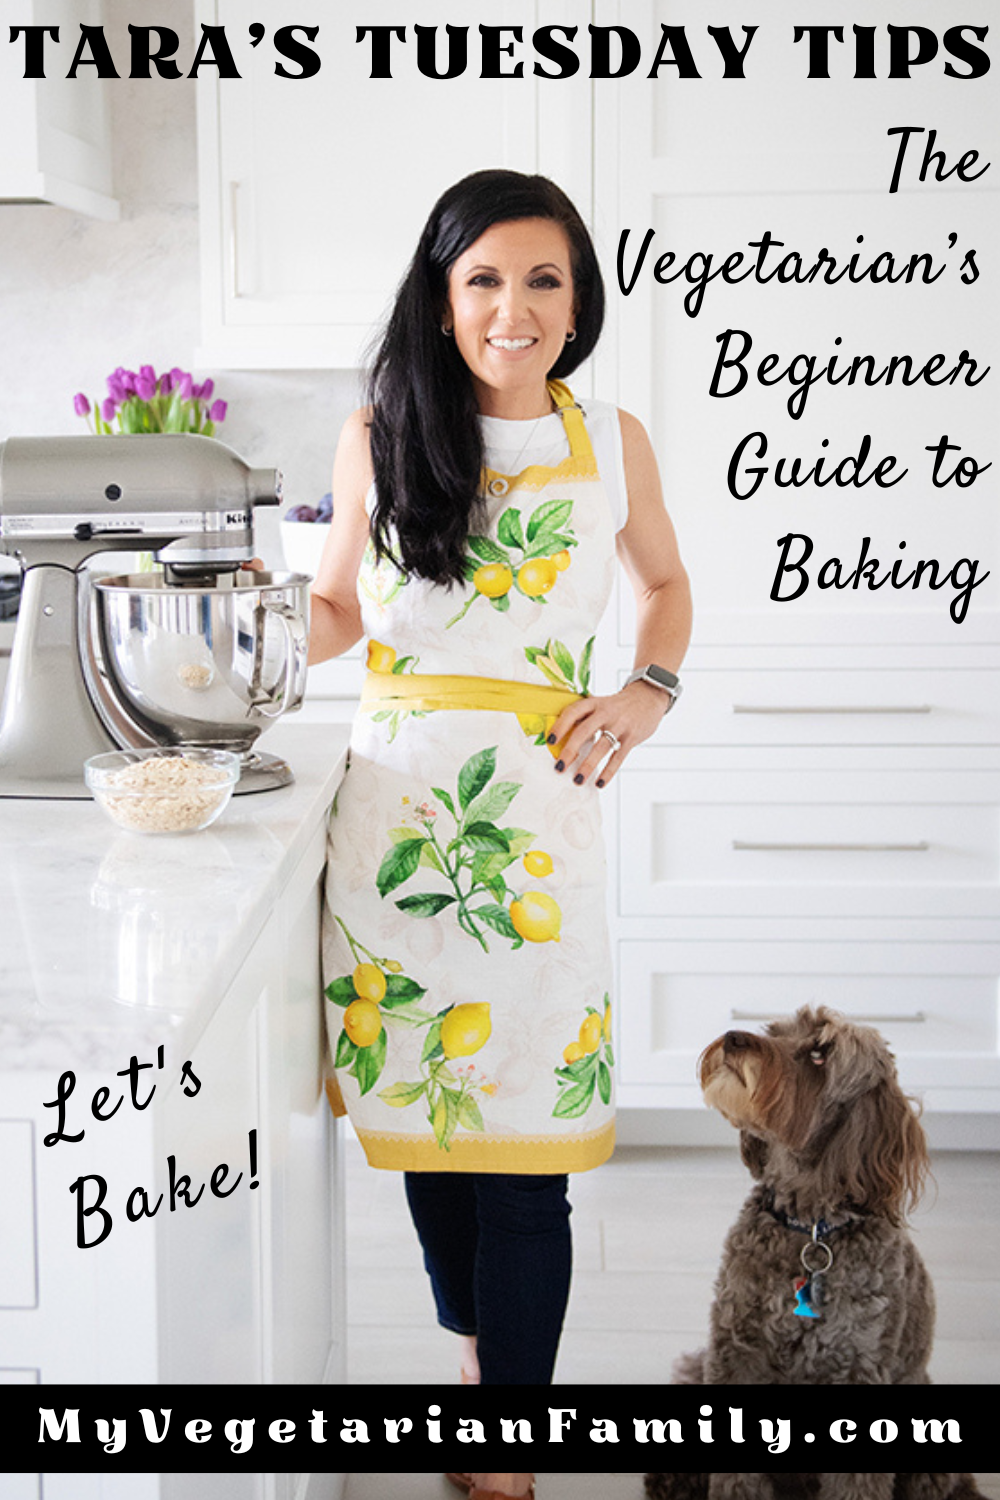 The Vegetarian’s Beginner Guide to Baking | Tara's Tuesday Tips | My vegetarian Family #tarastuesdaytips #vegetarianbaking